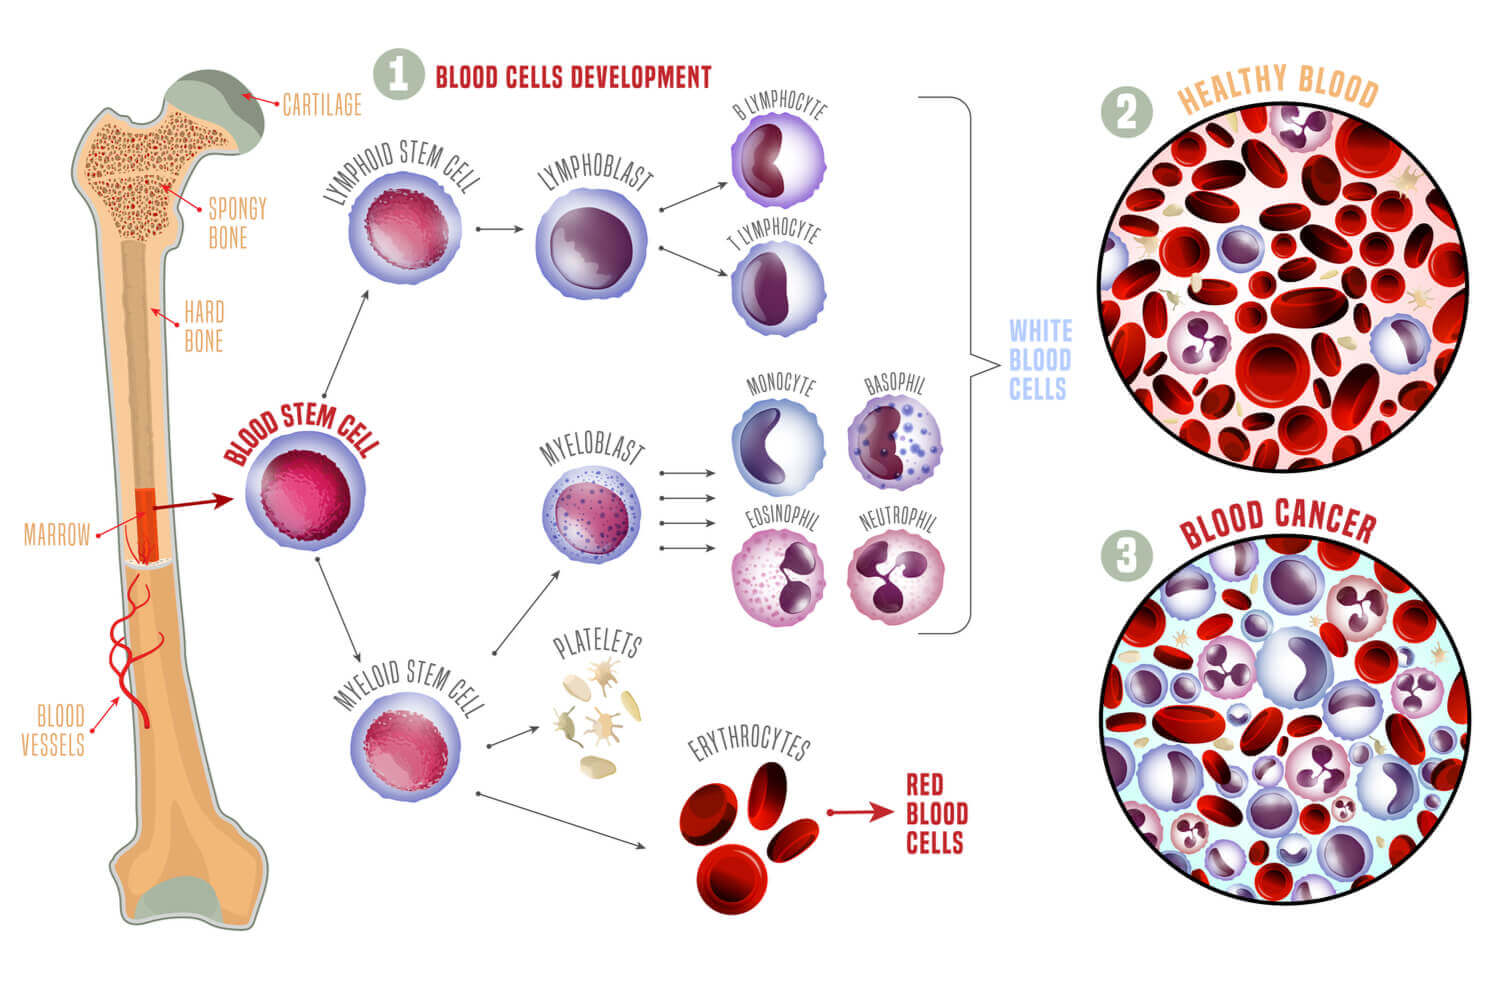 Blood cells production